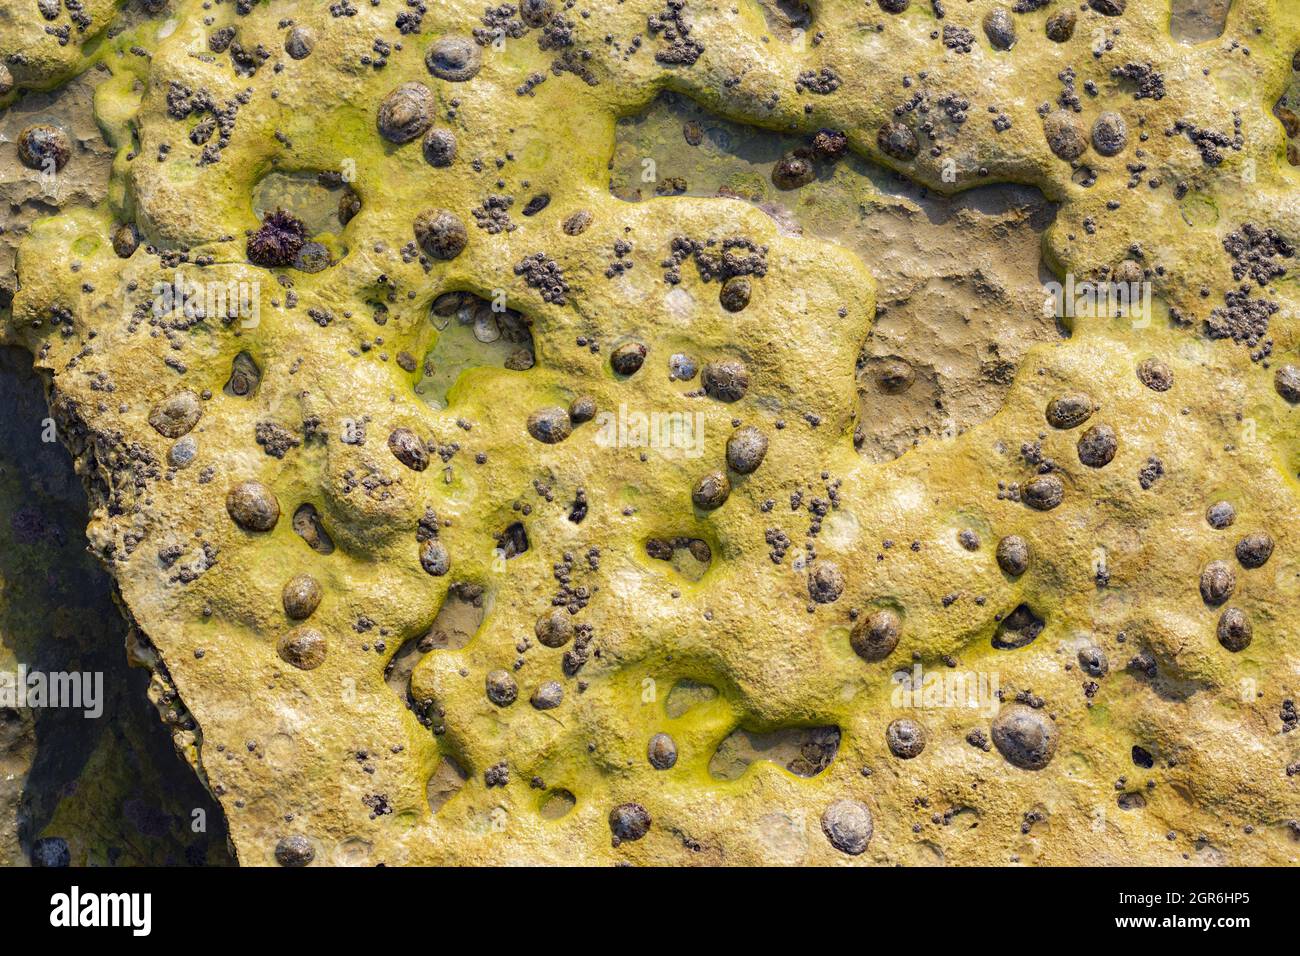 Closeup shot of arthonia vinosa for wallpaper and background Stock Photo